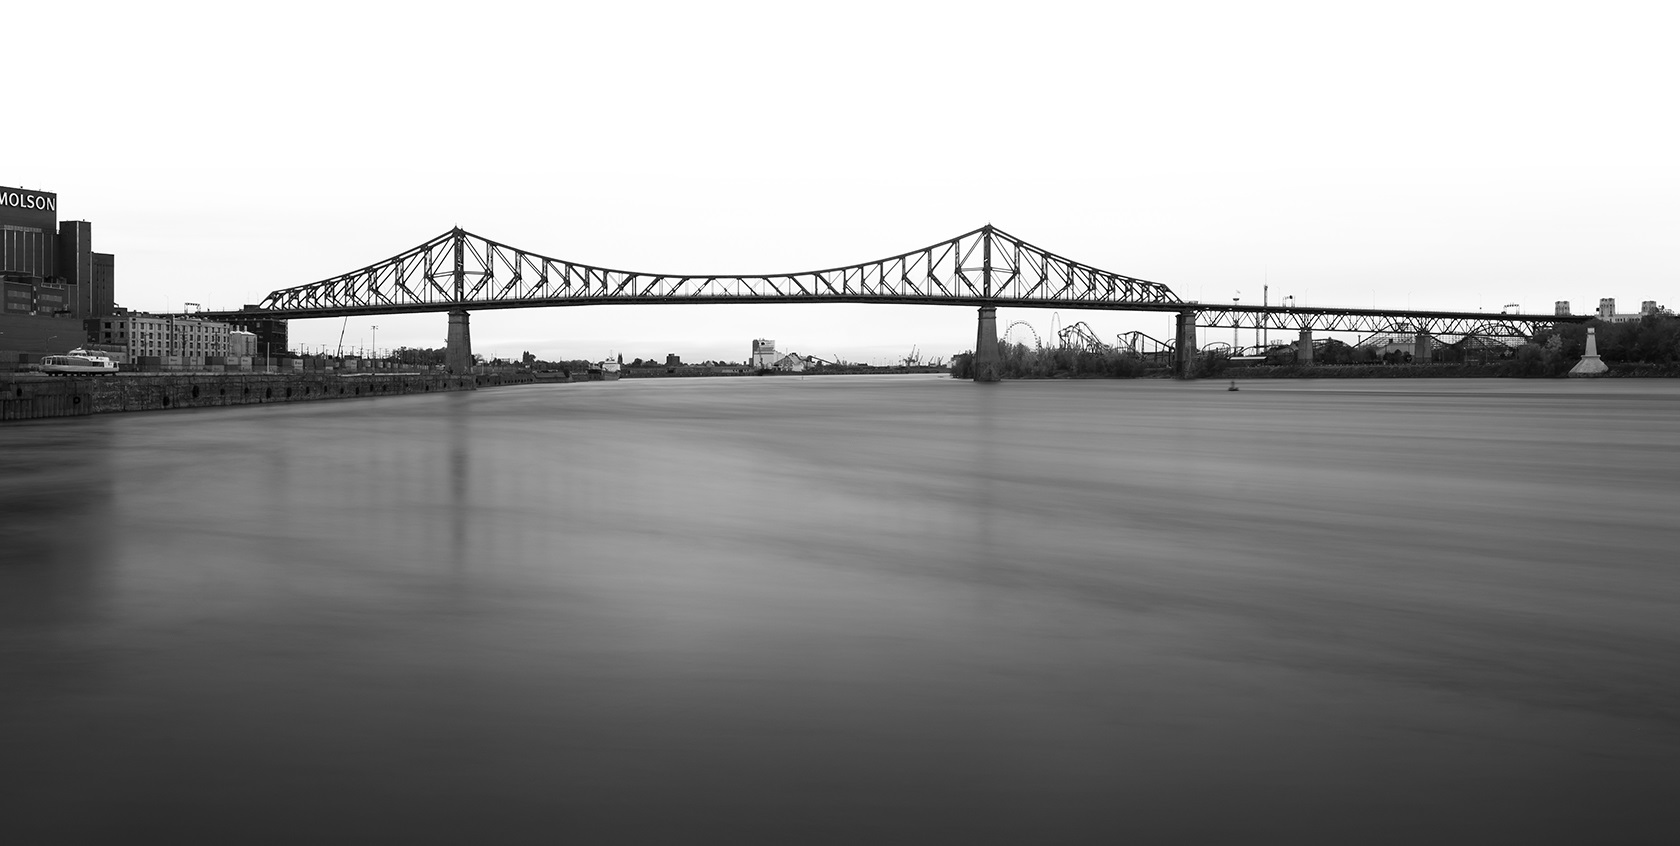 Jacques Cartier Bridge, Montreal, Quebec, Canada